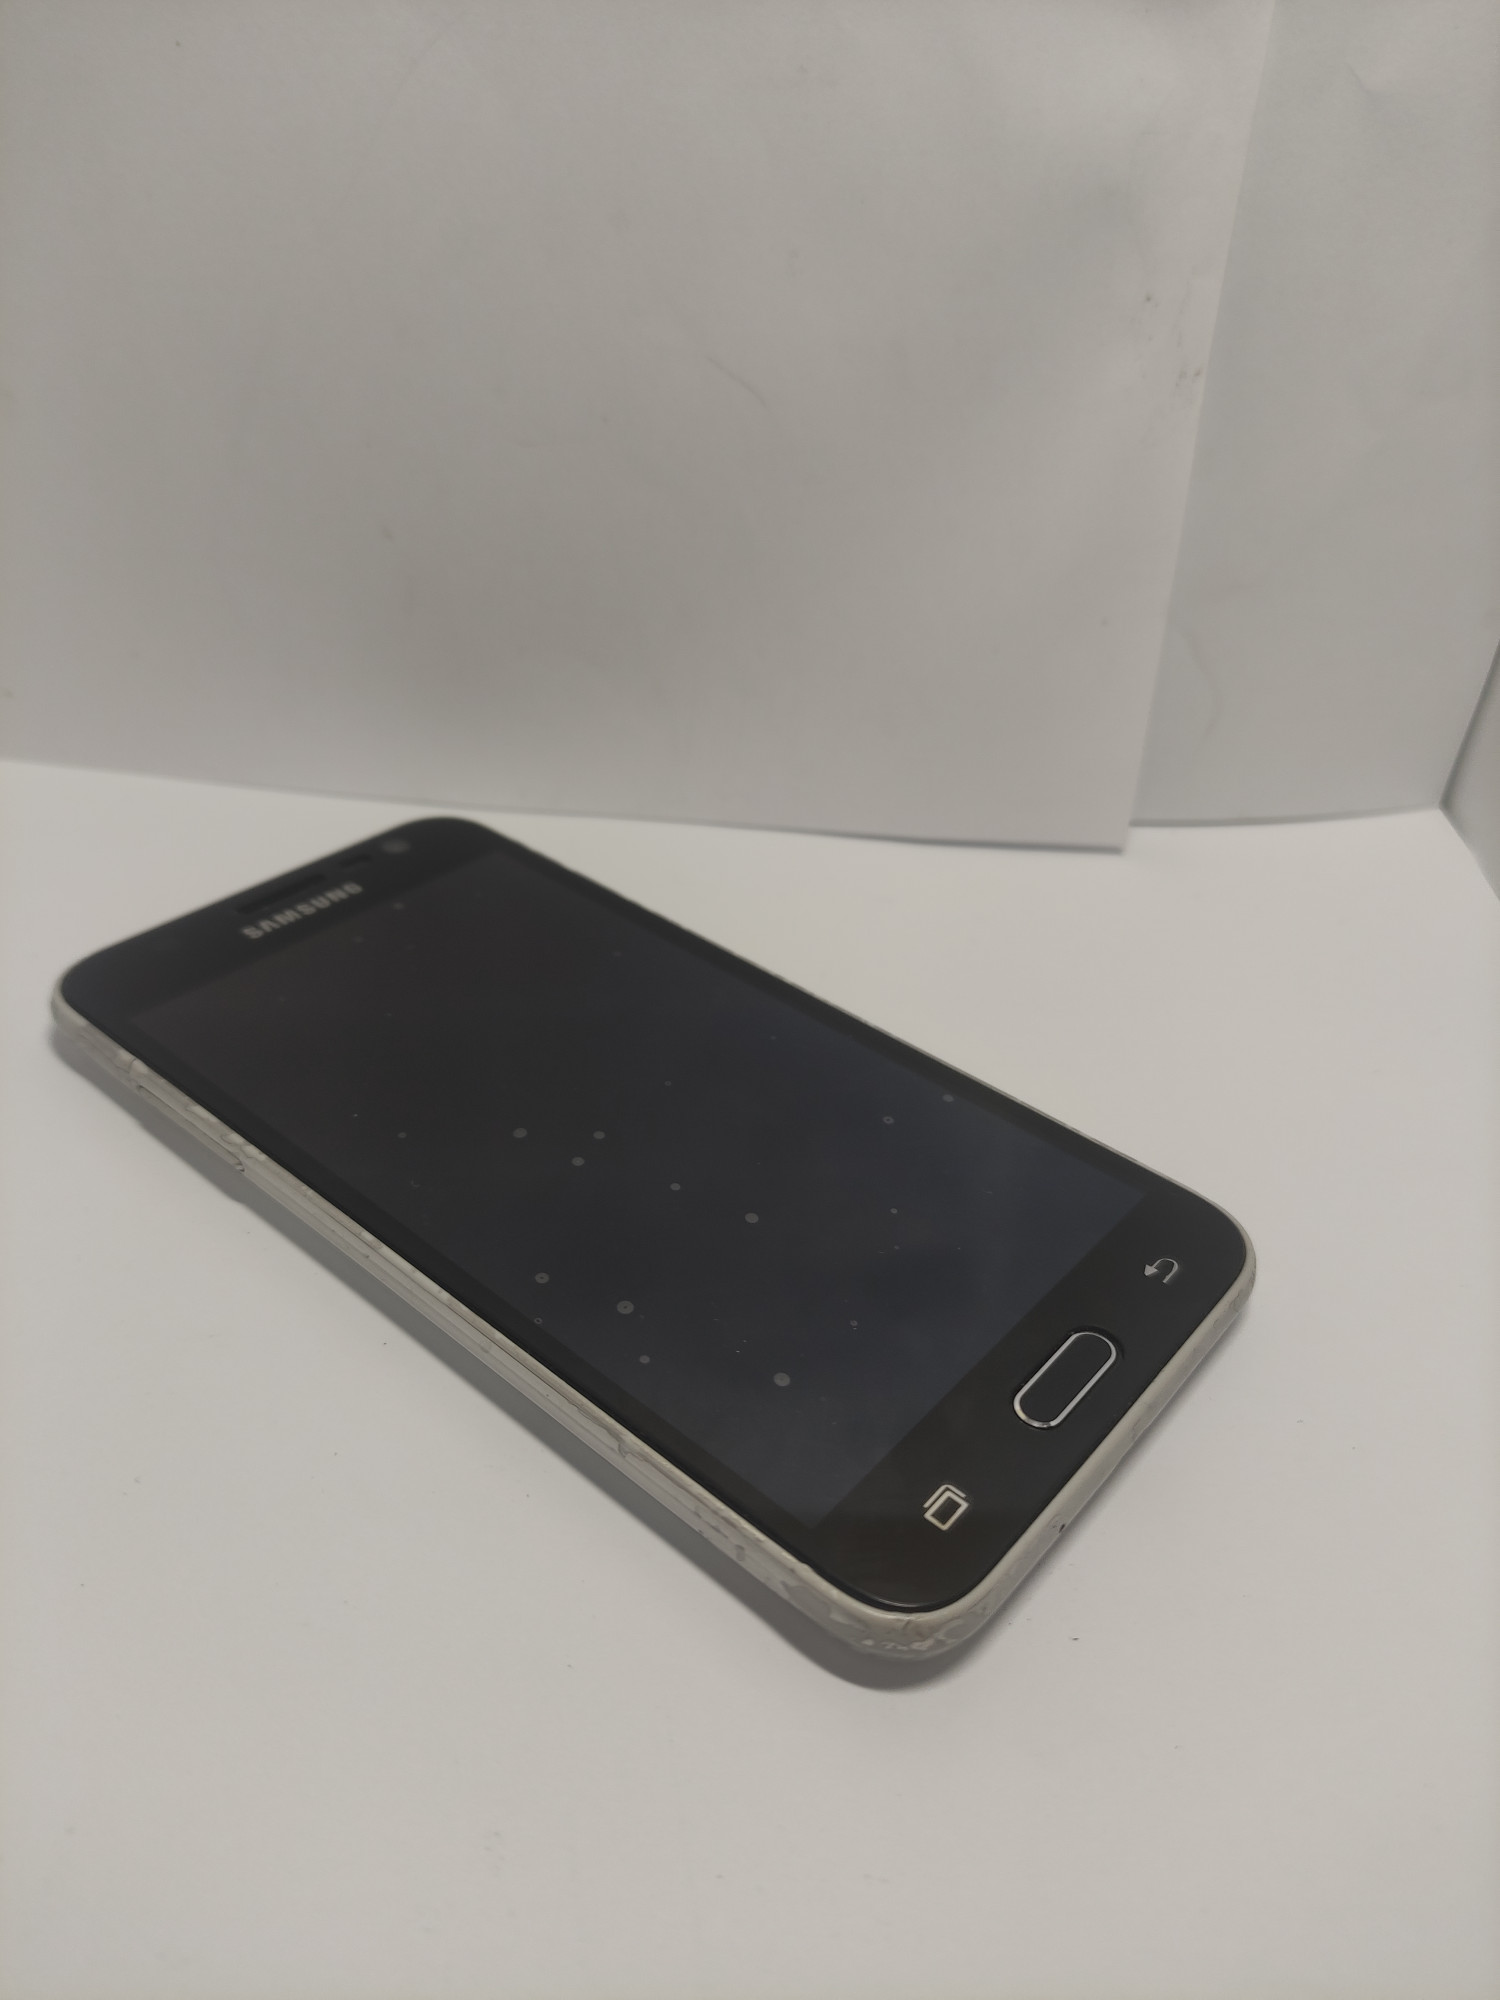 Samsung Galaxy J3 2016 White (SM-J320HZWD) 1/8Gb 2